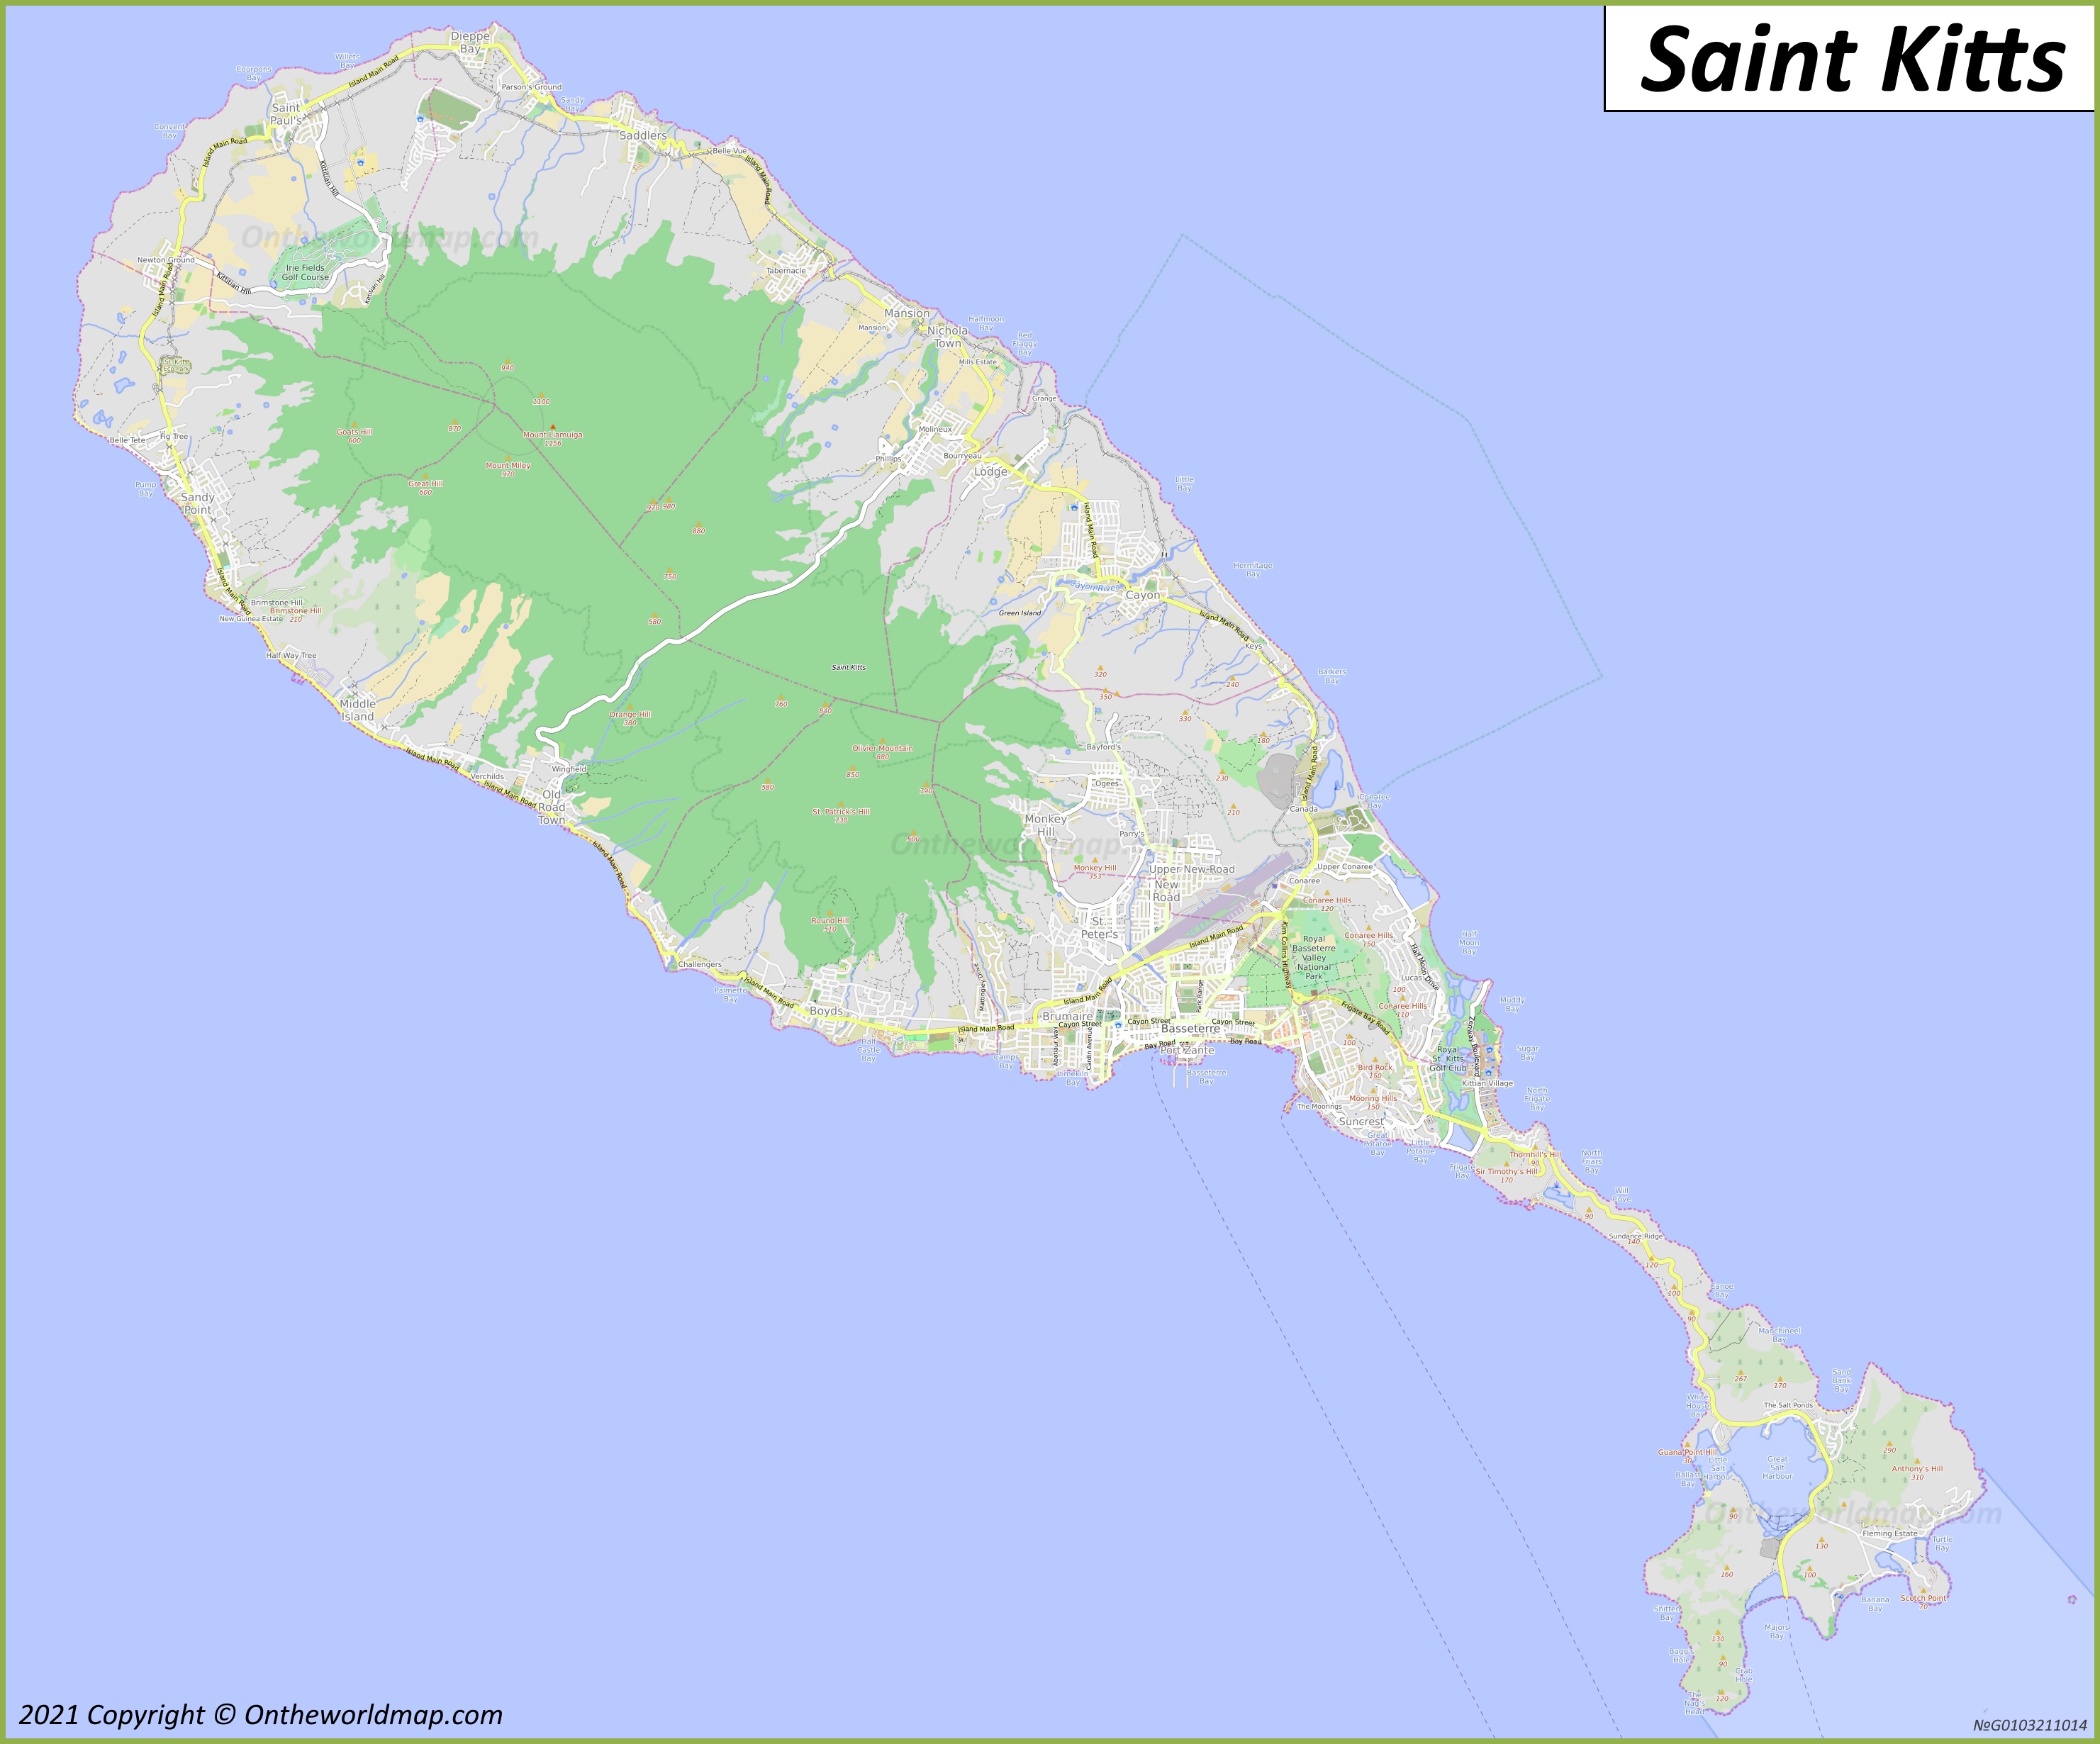 Detailed Map of Saint Kitts Island